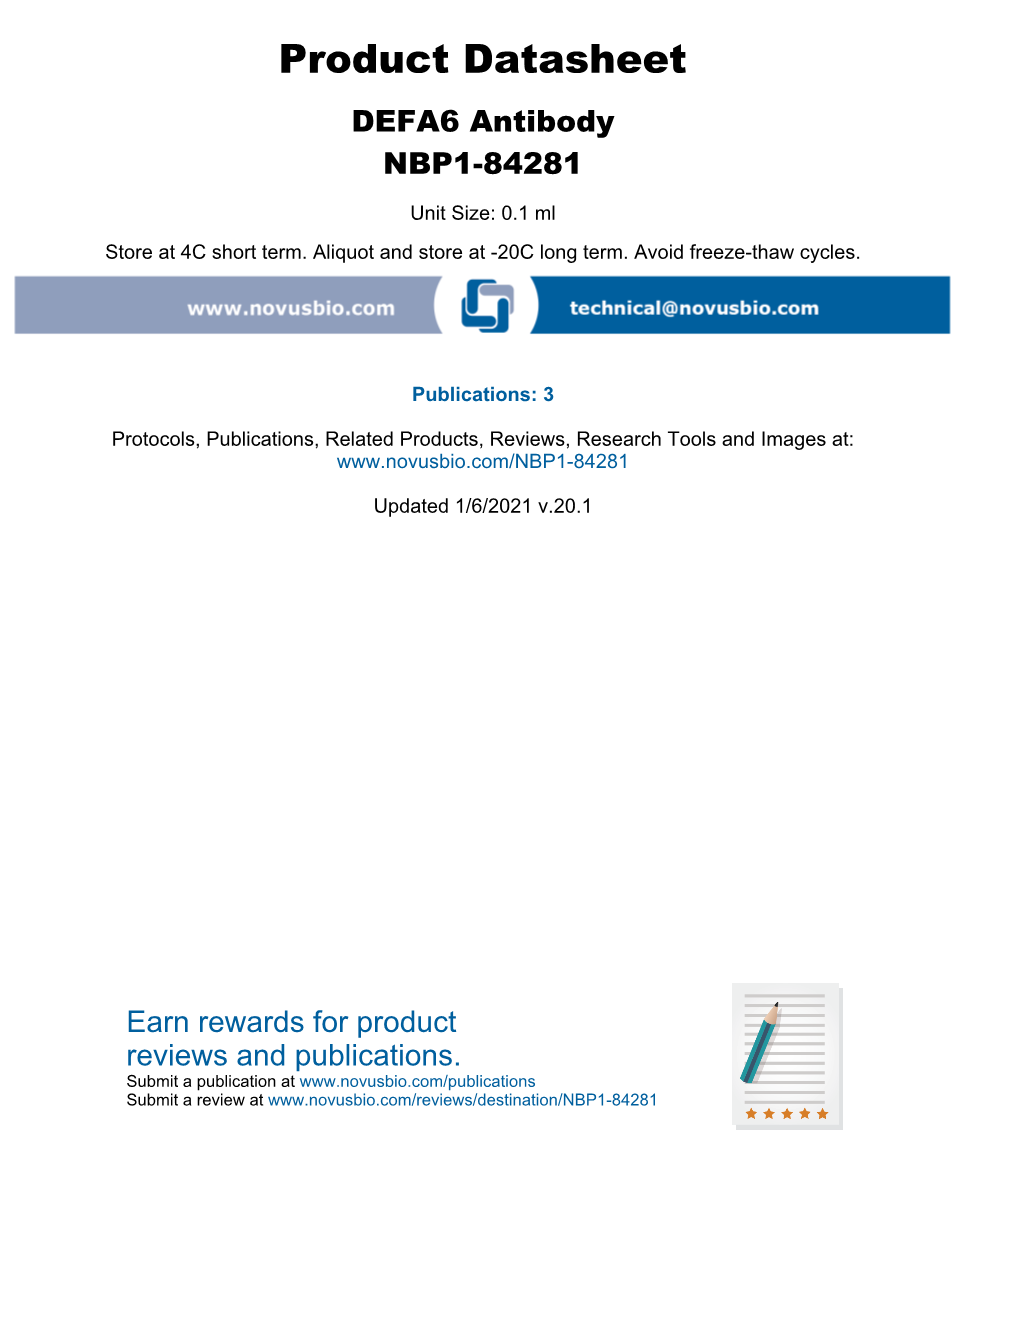 Product Datasheet DEFA6 Antibody NBP1-84281